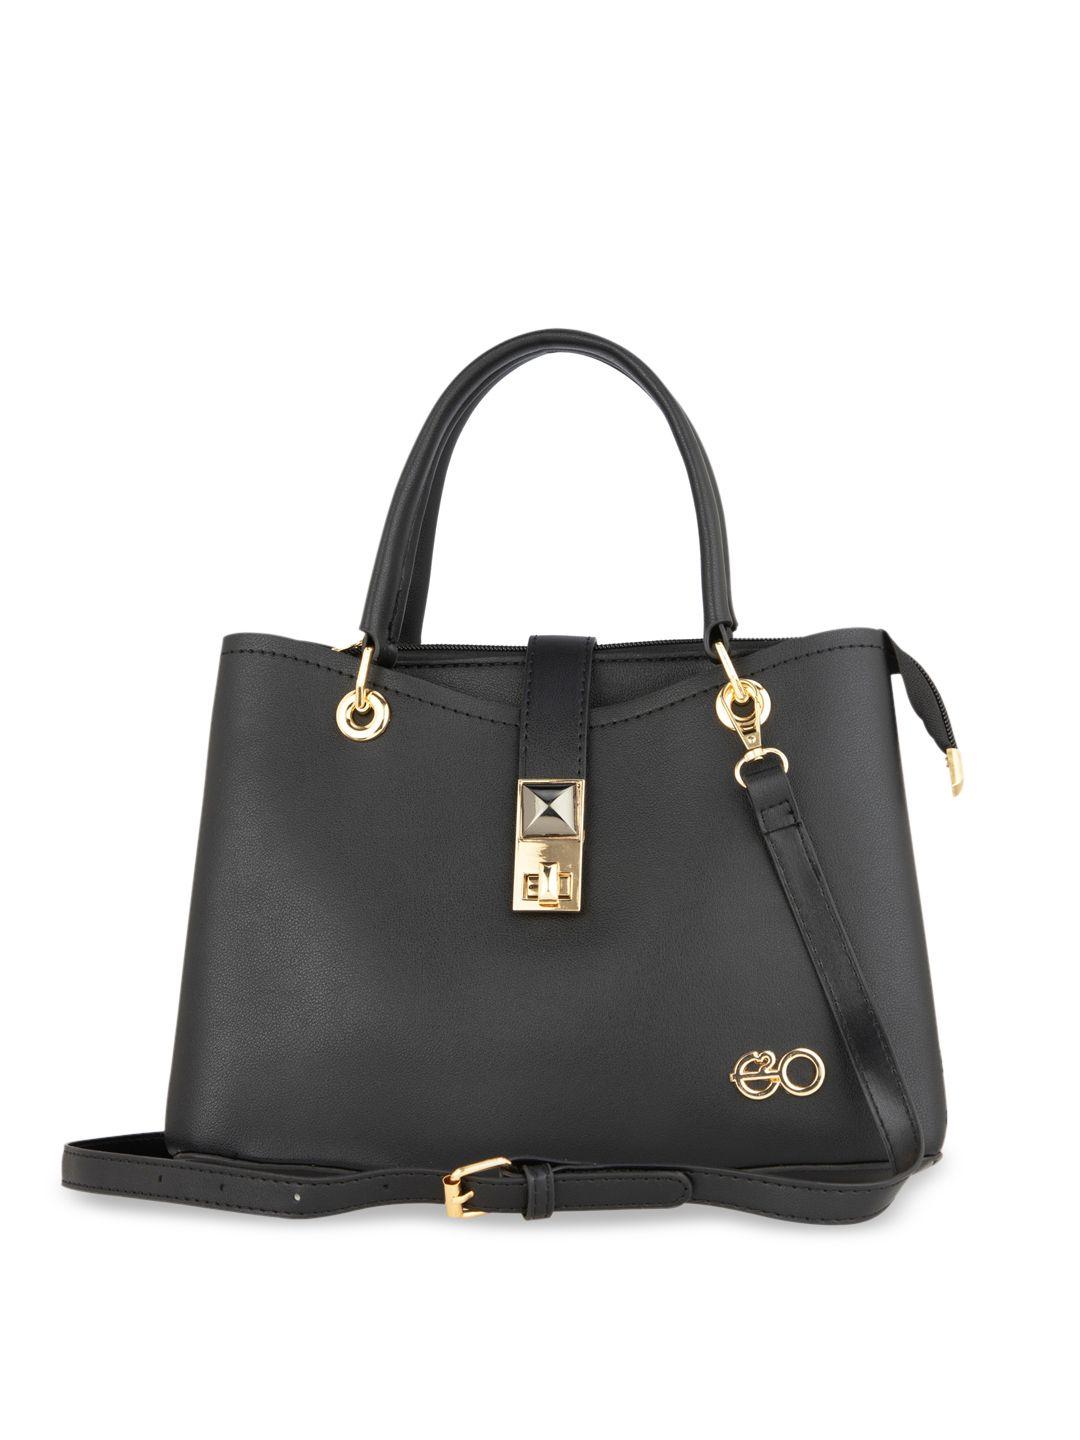 e2o women black structured handheld bag